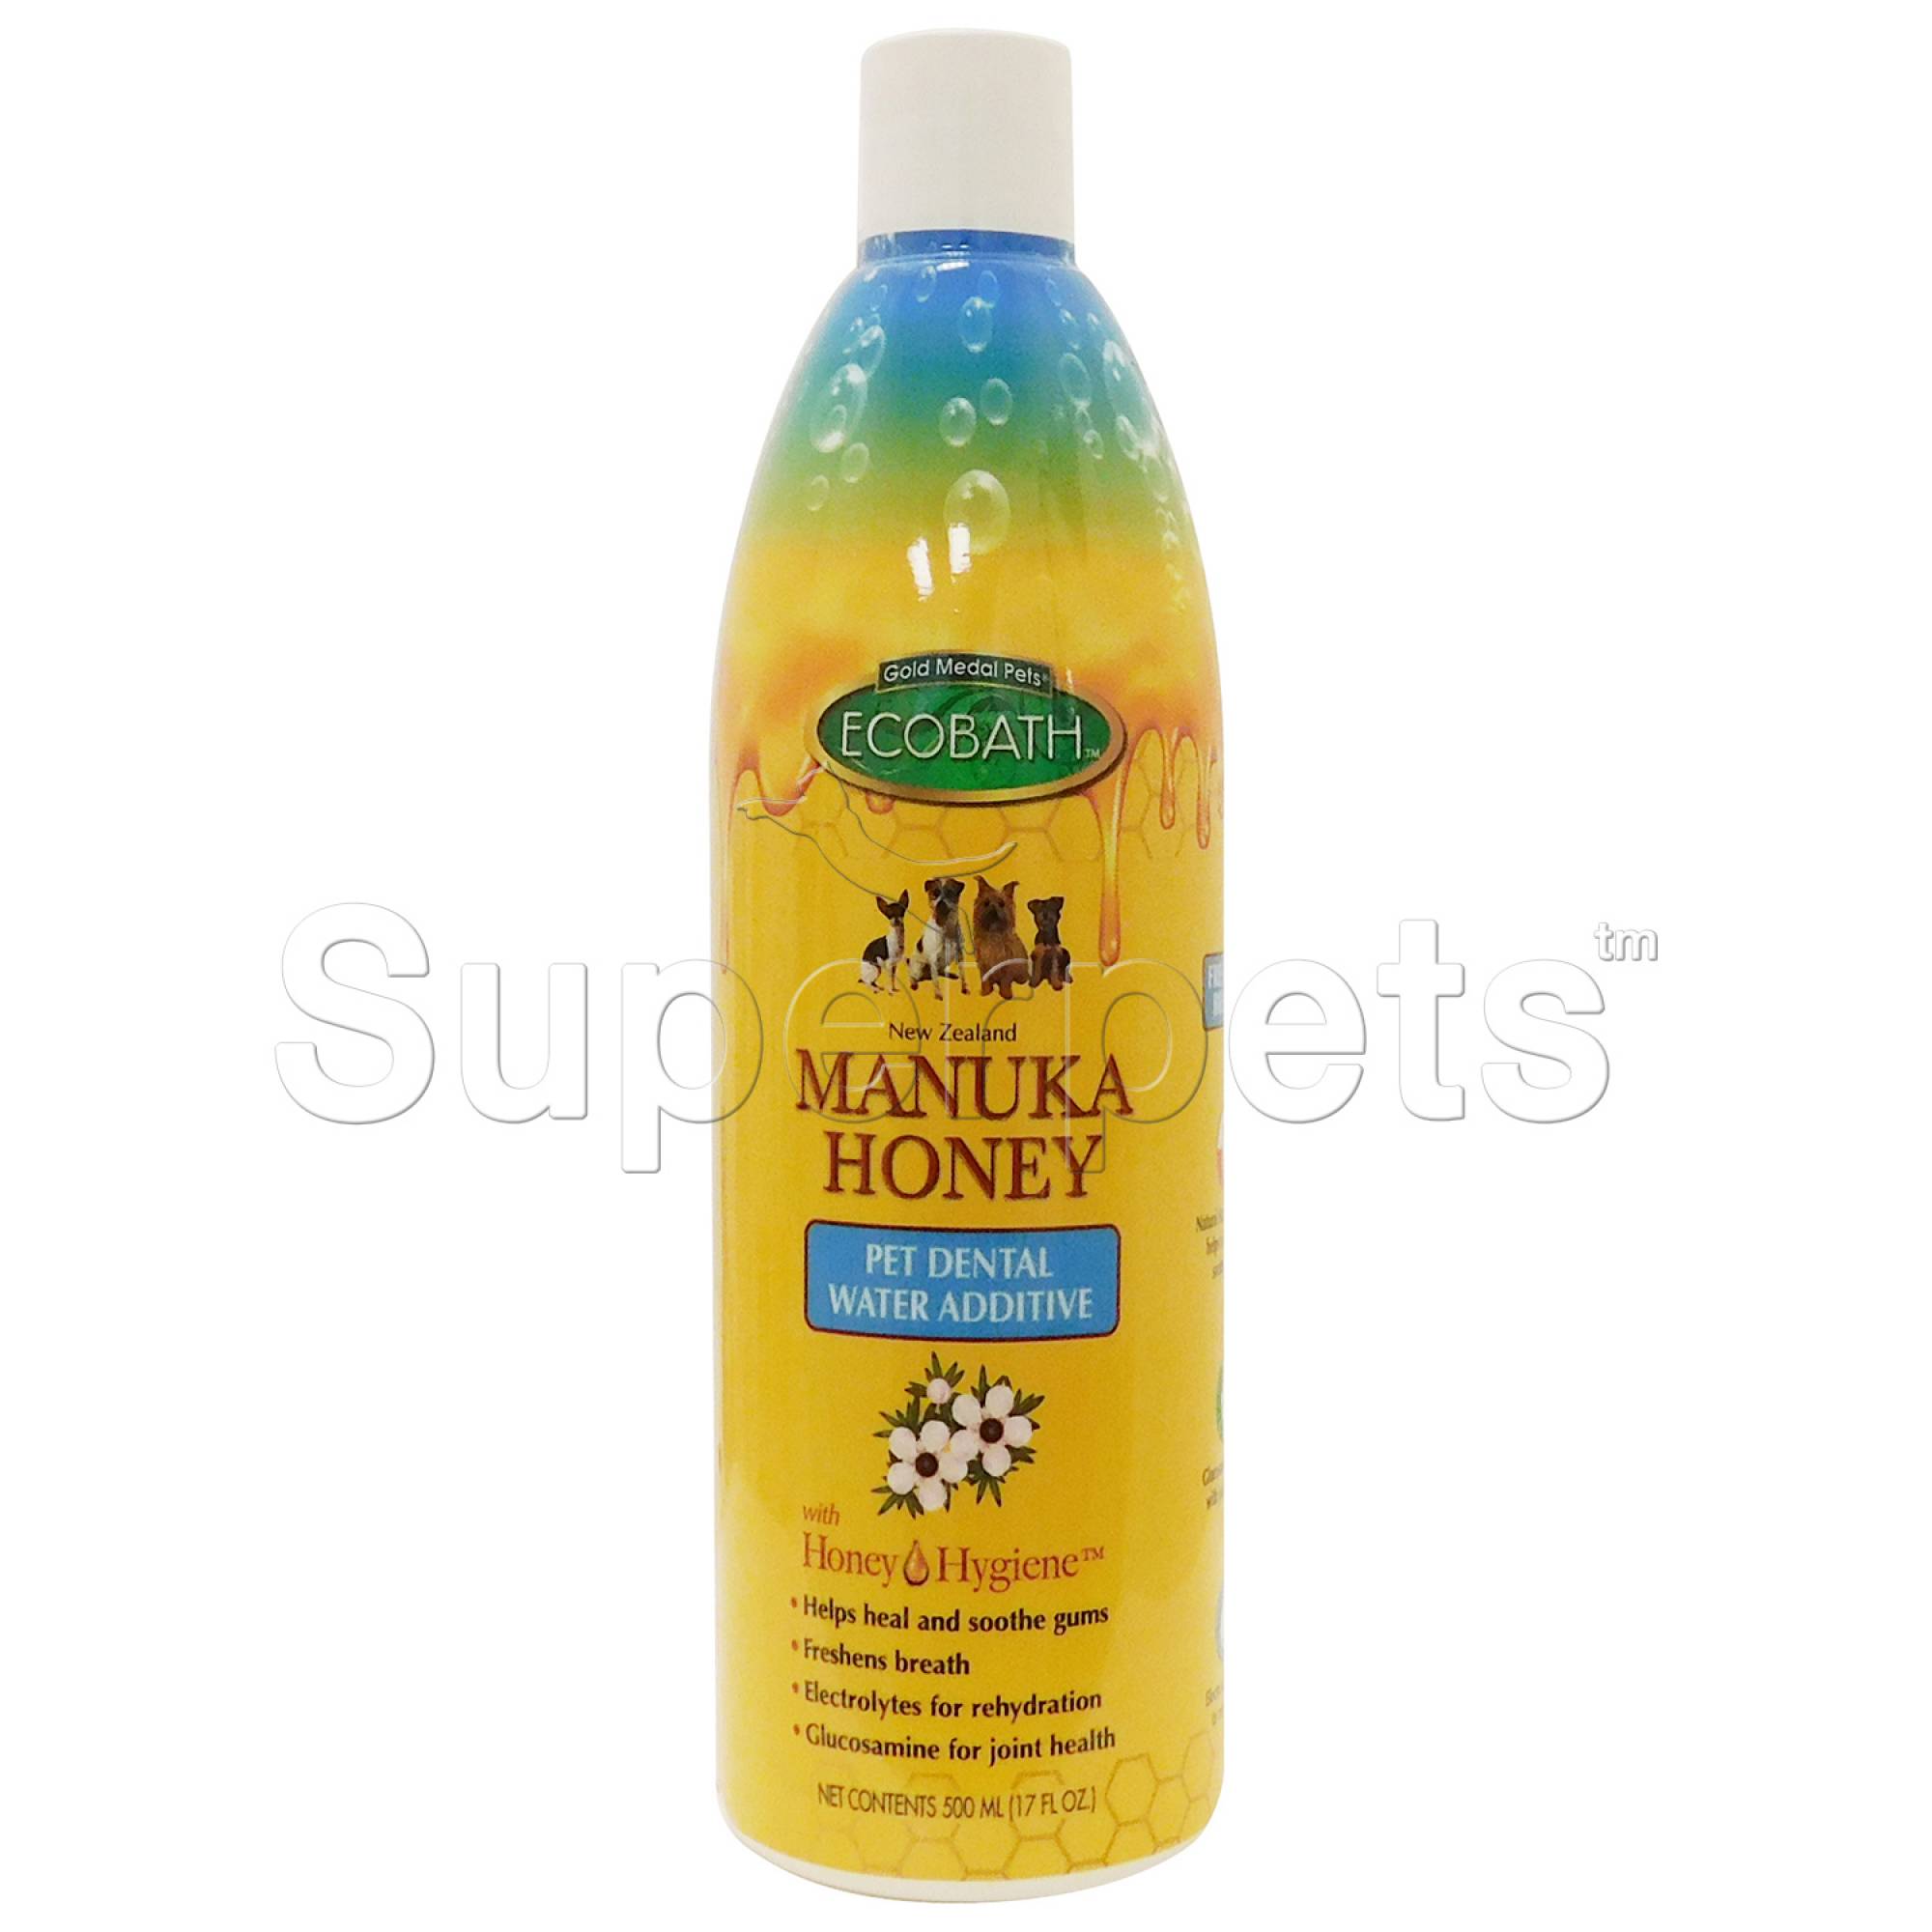 Gold Medal Pets - EcoBath Manuka Honey Pet Dental Water Additive 500ml (17oz)